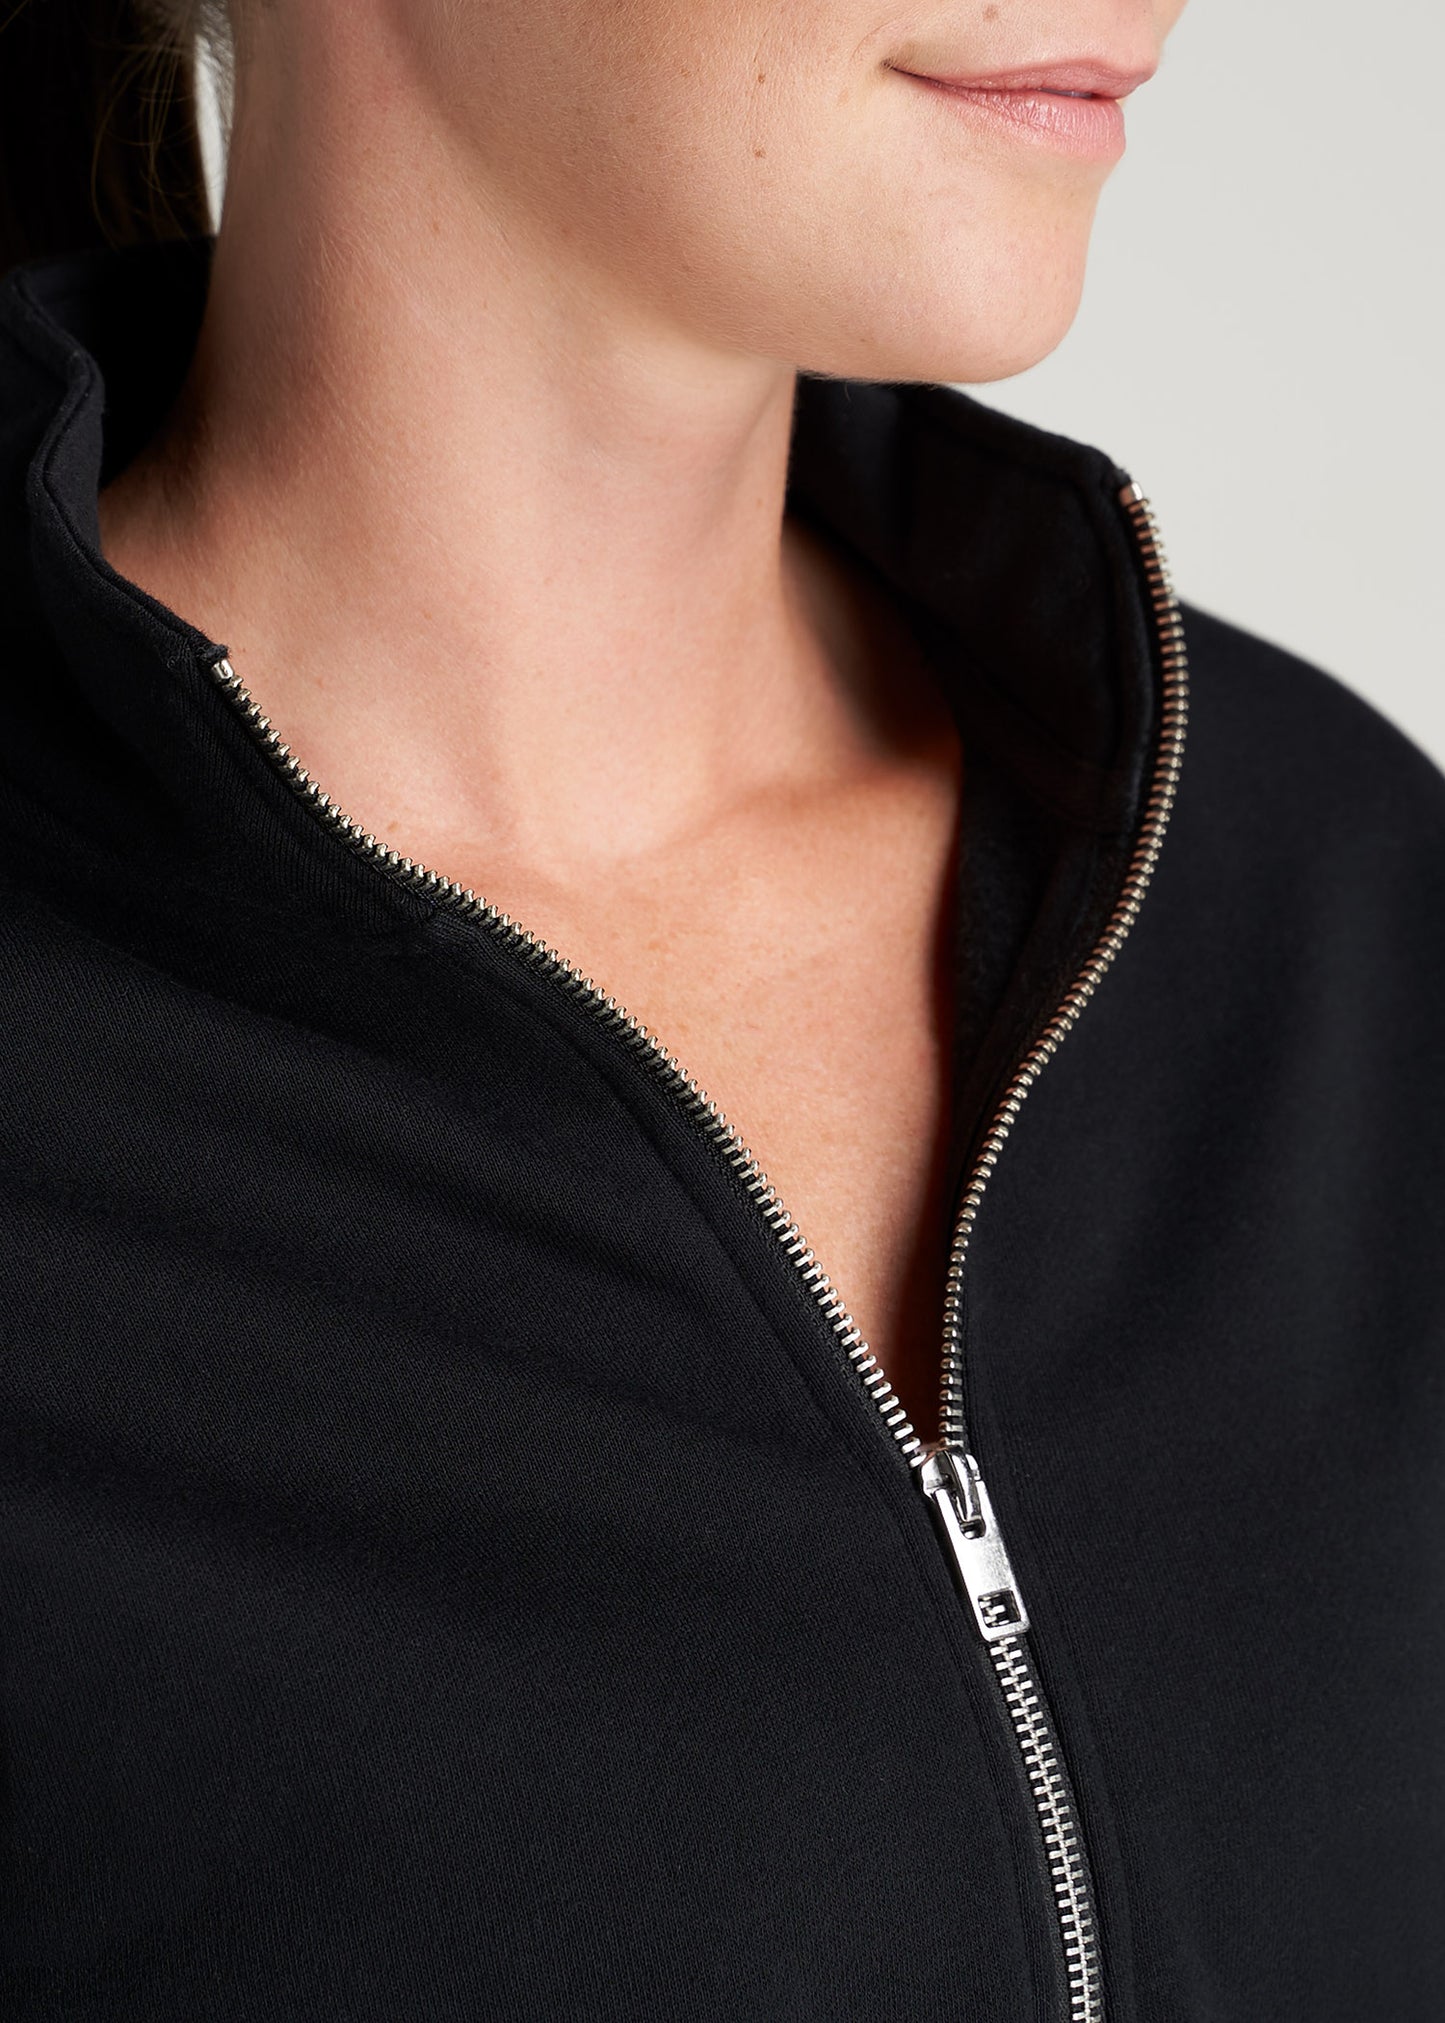 American-Tall-Women-8020-PD-HalfZip-Sweatshirt-Black-detail